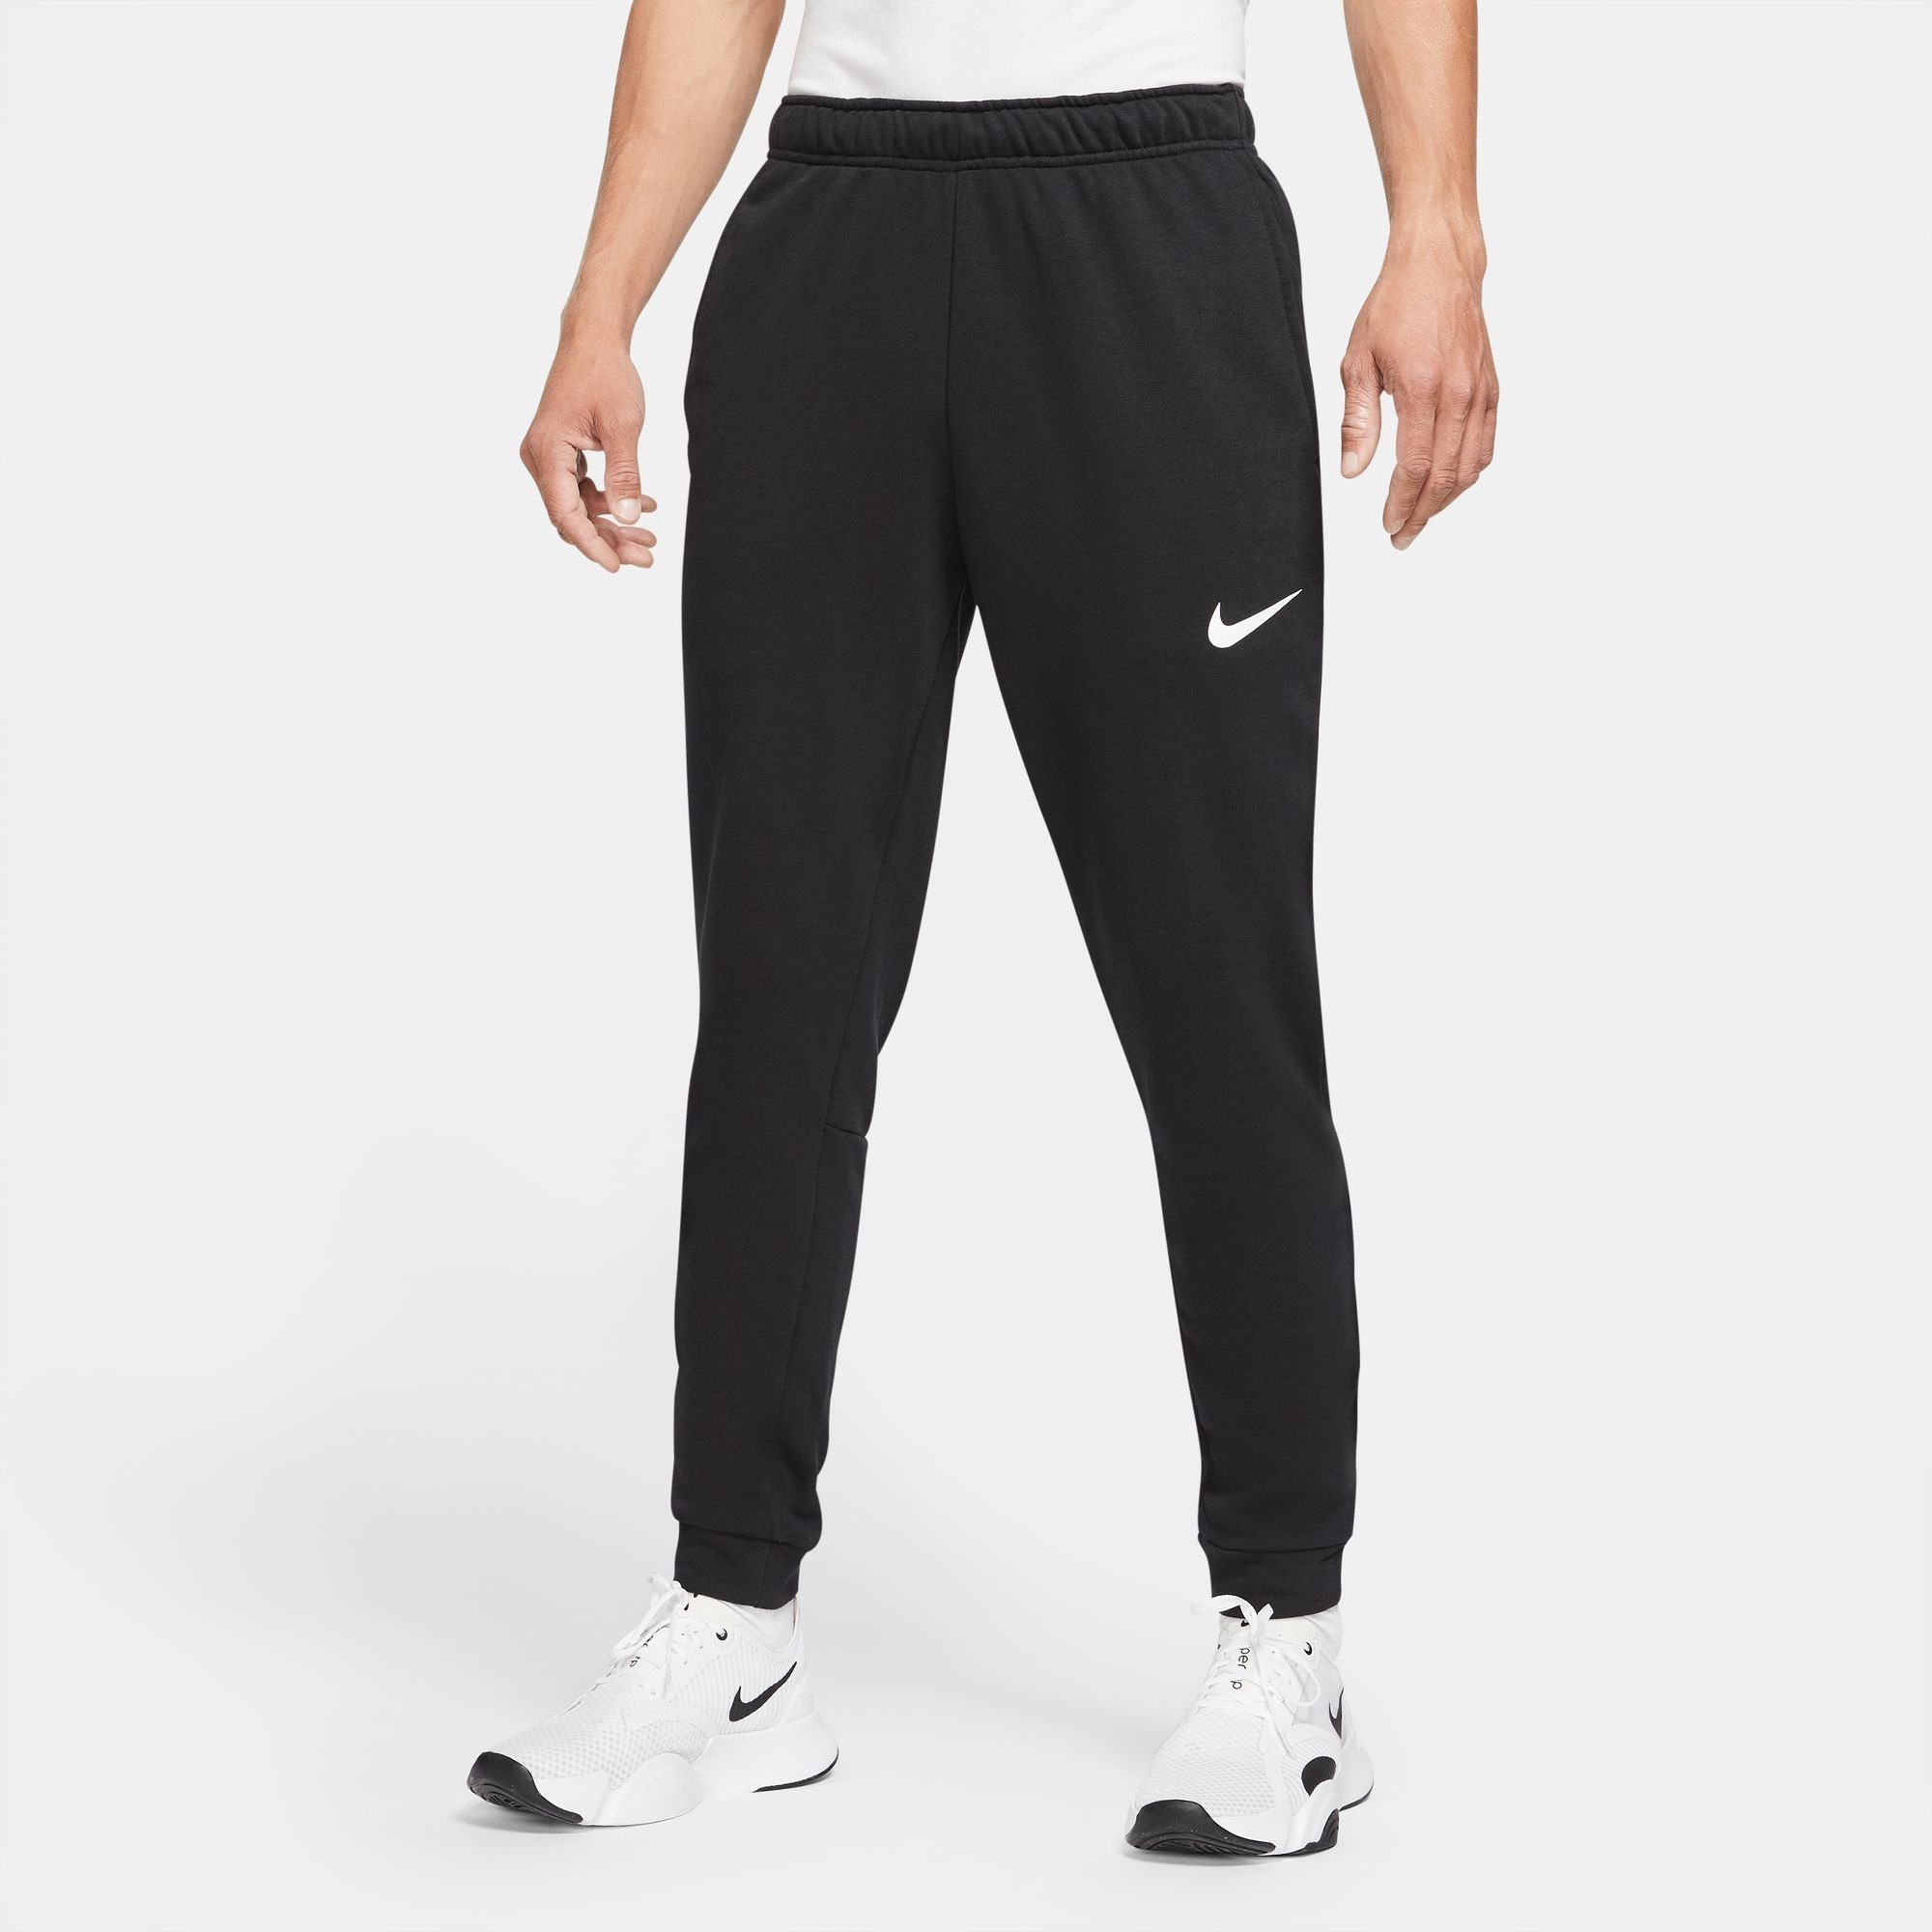 Nike Trainingshose DRI-FIT MEN'S TAPERED TRAINING PANTS schwarz